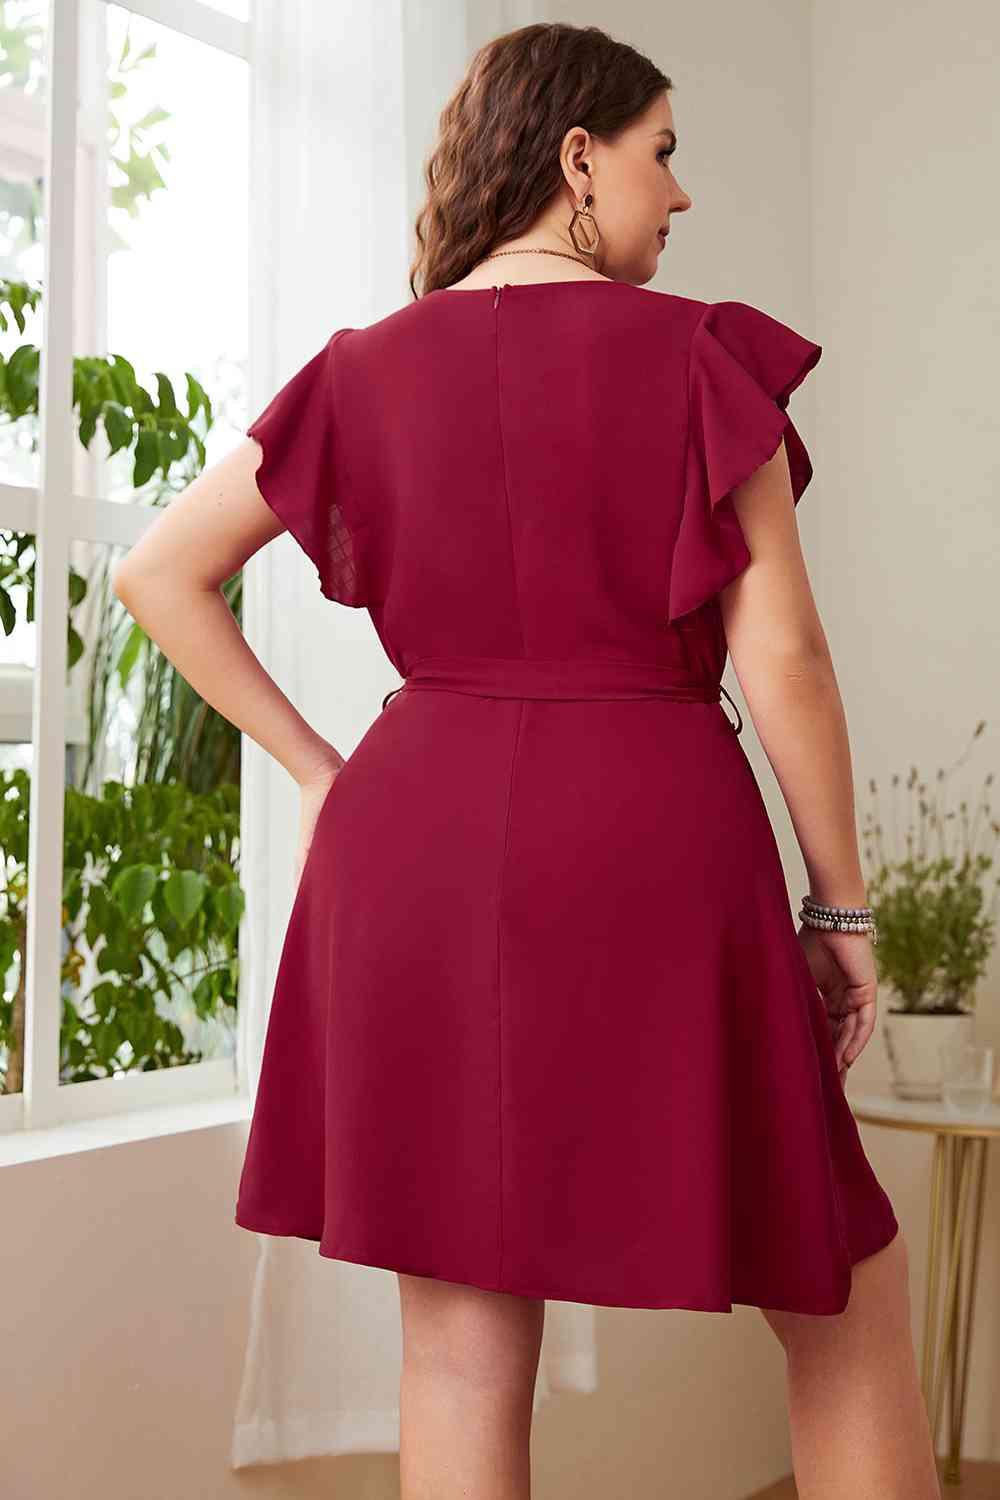 TEEK - Deep Red Plus Size Tie Waist Dress DRESS TEEK Trend   